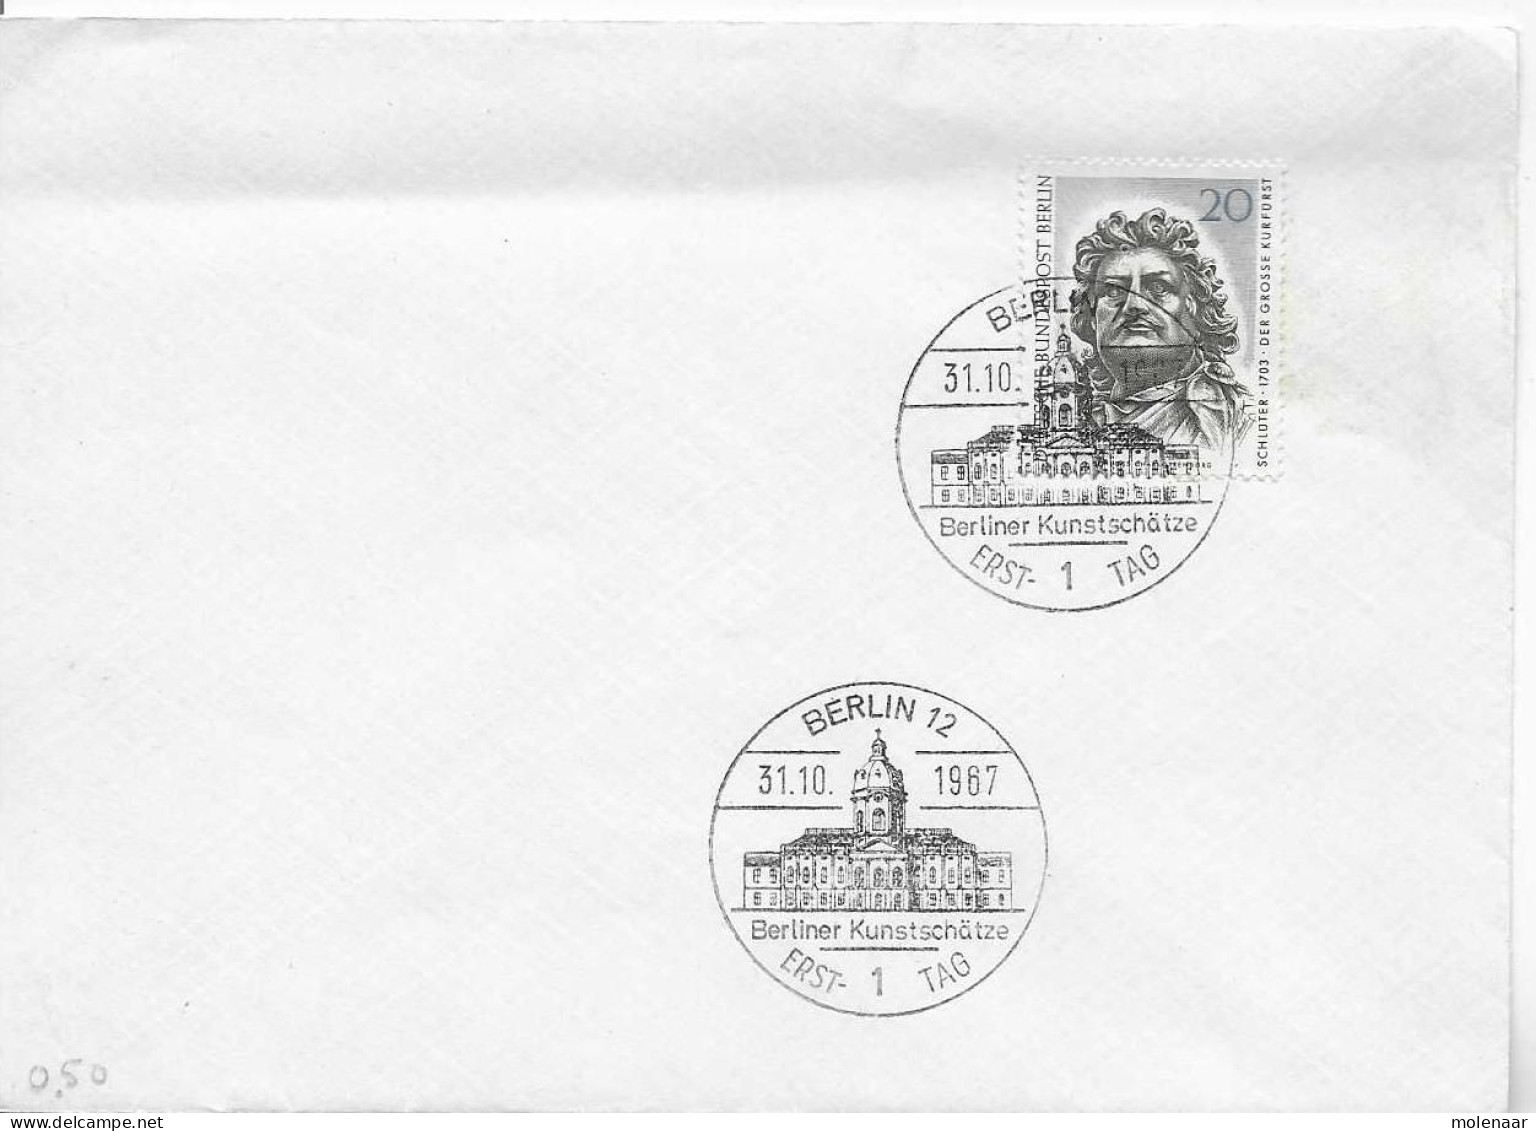 Postzegels > Europa > Duitsland > Berlijn > 1e Dag FDC (brieven) > 1948-1970 Met No. 303 (17155) - Blocks & Kleinbögen